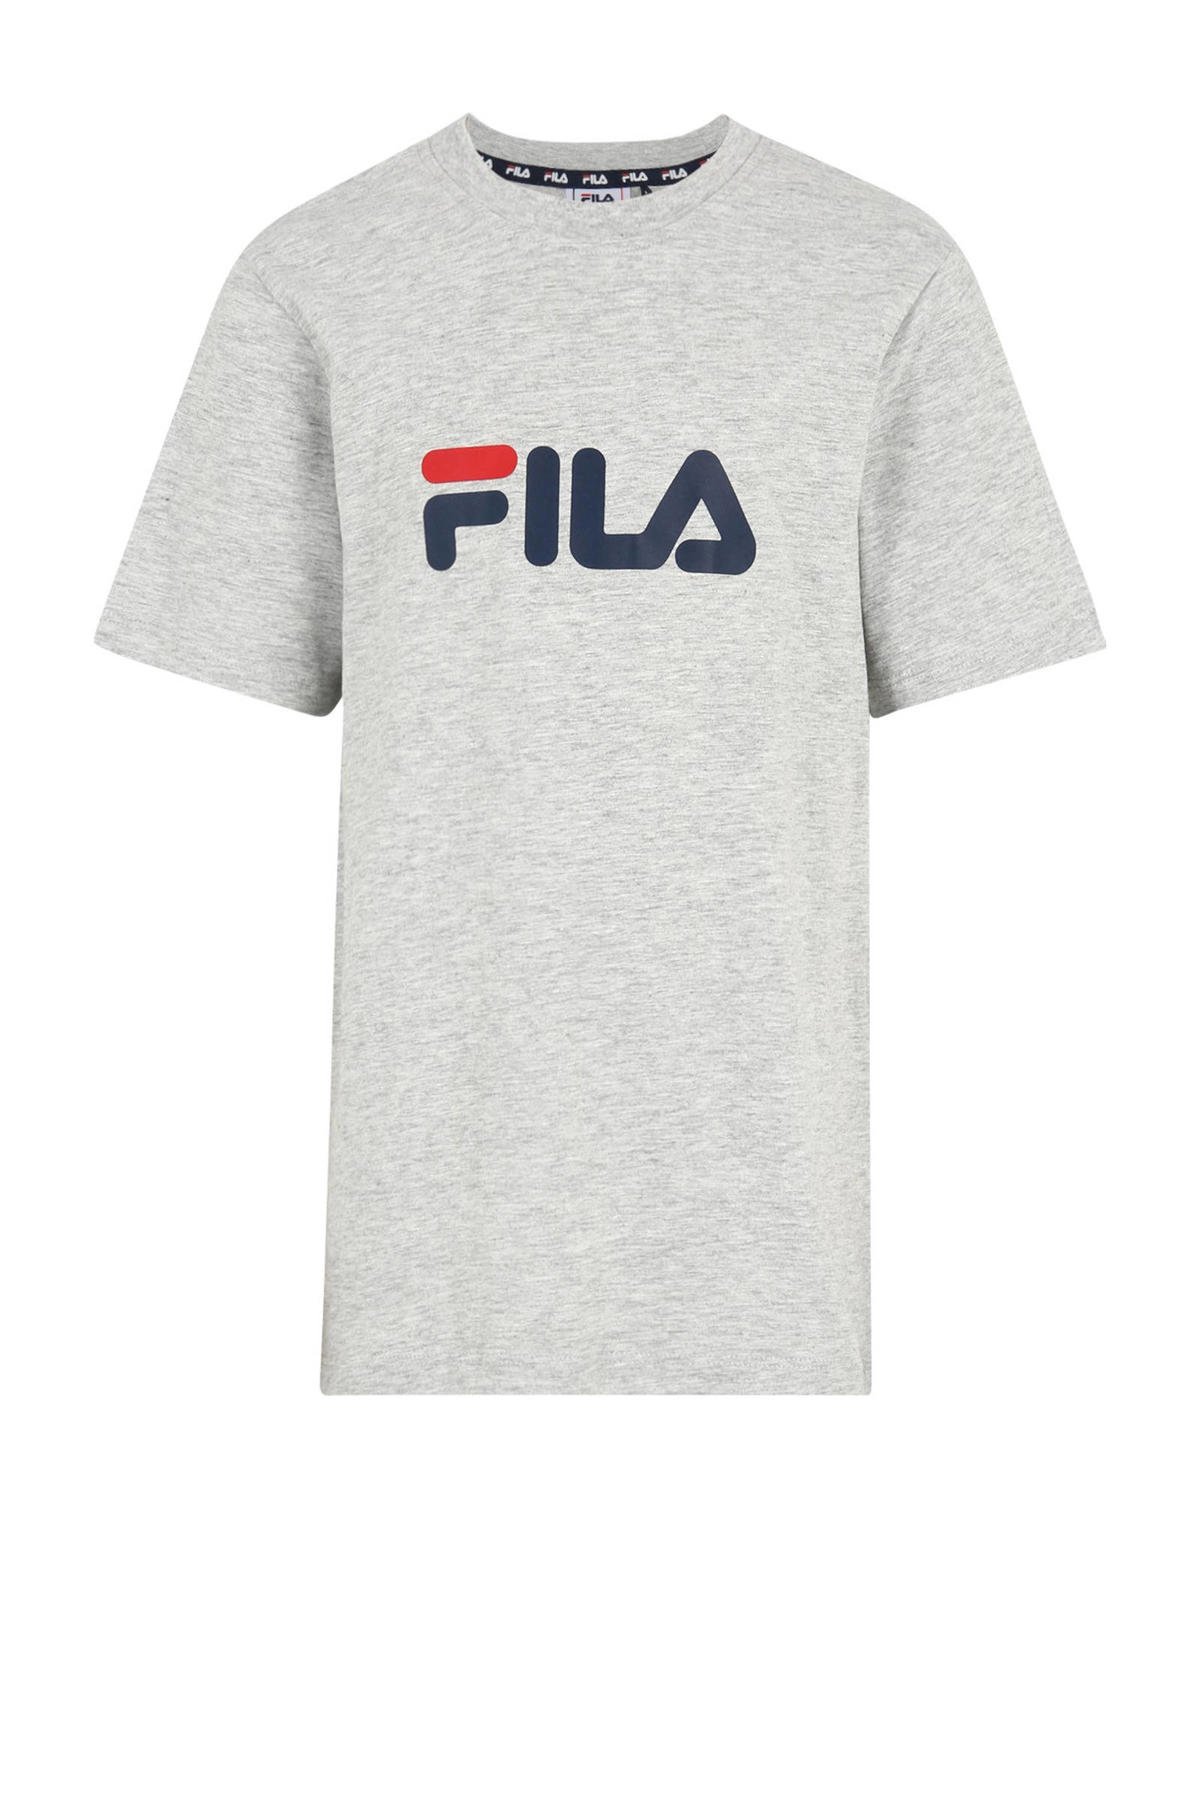 Gedwongen Ontwapening spoel Fila T-shirt Solberg grijs melange | wehkamp